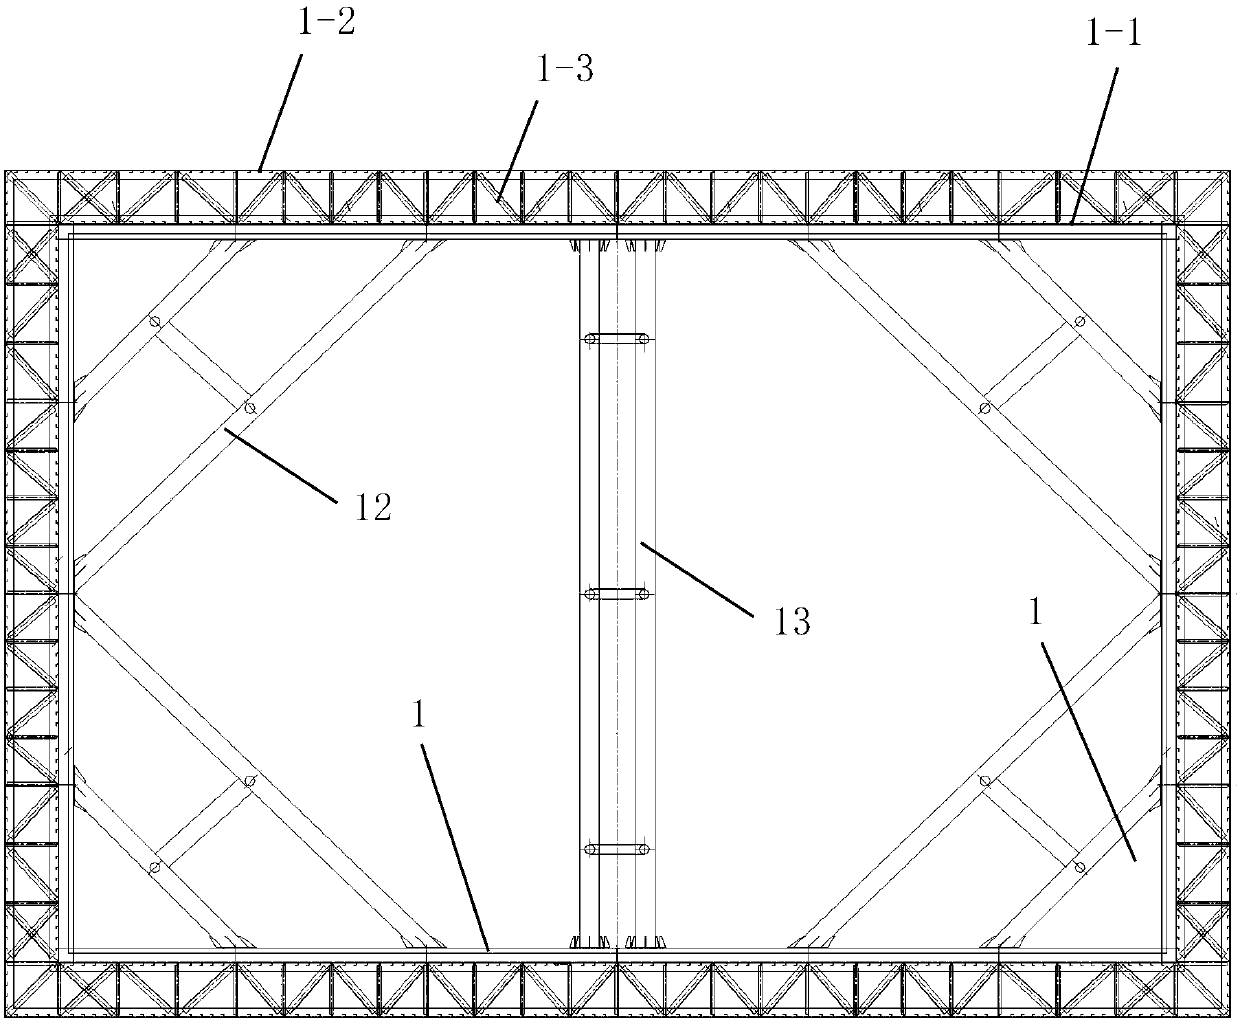 Slope rock riverbed steel cofferdam based on suspended corner processing structures